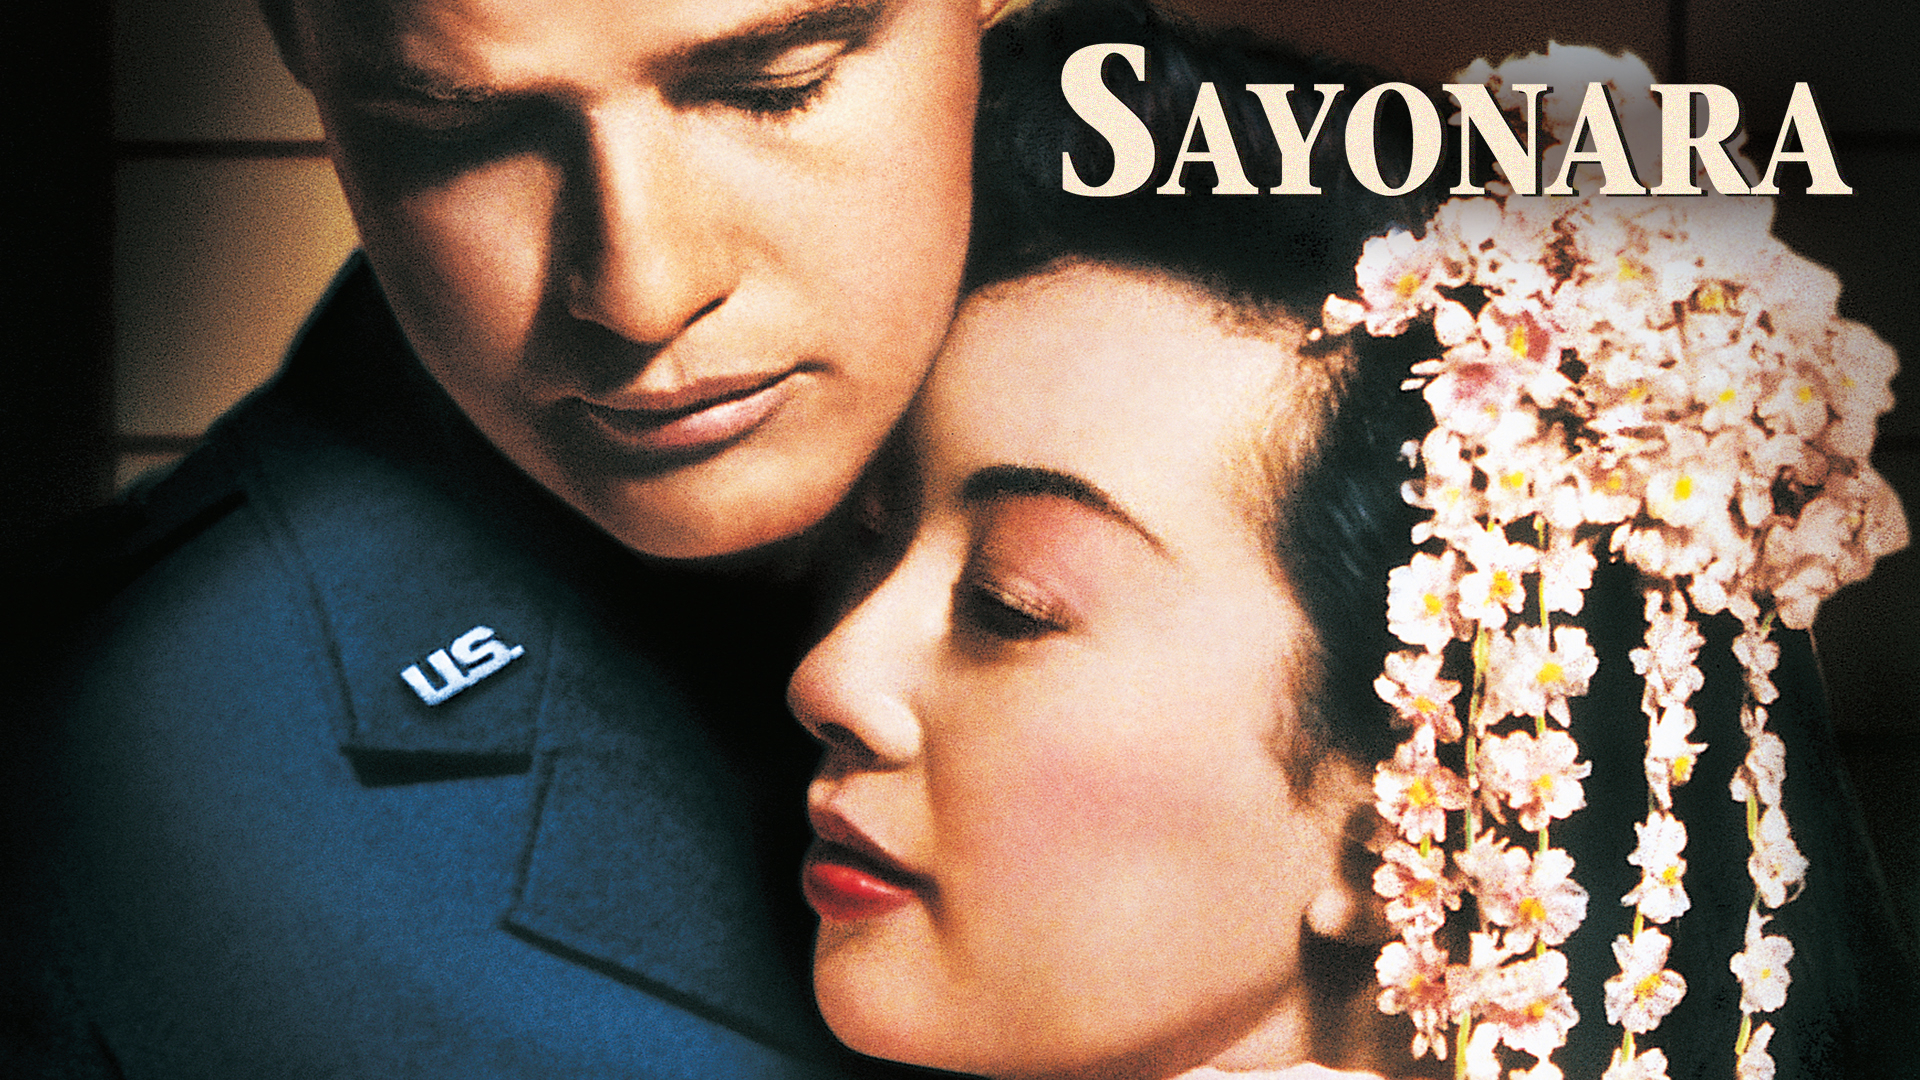 Sayonara / Sayonara (1957)